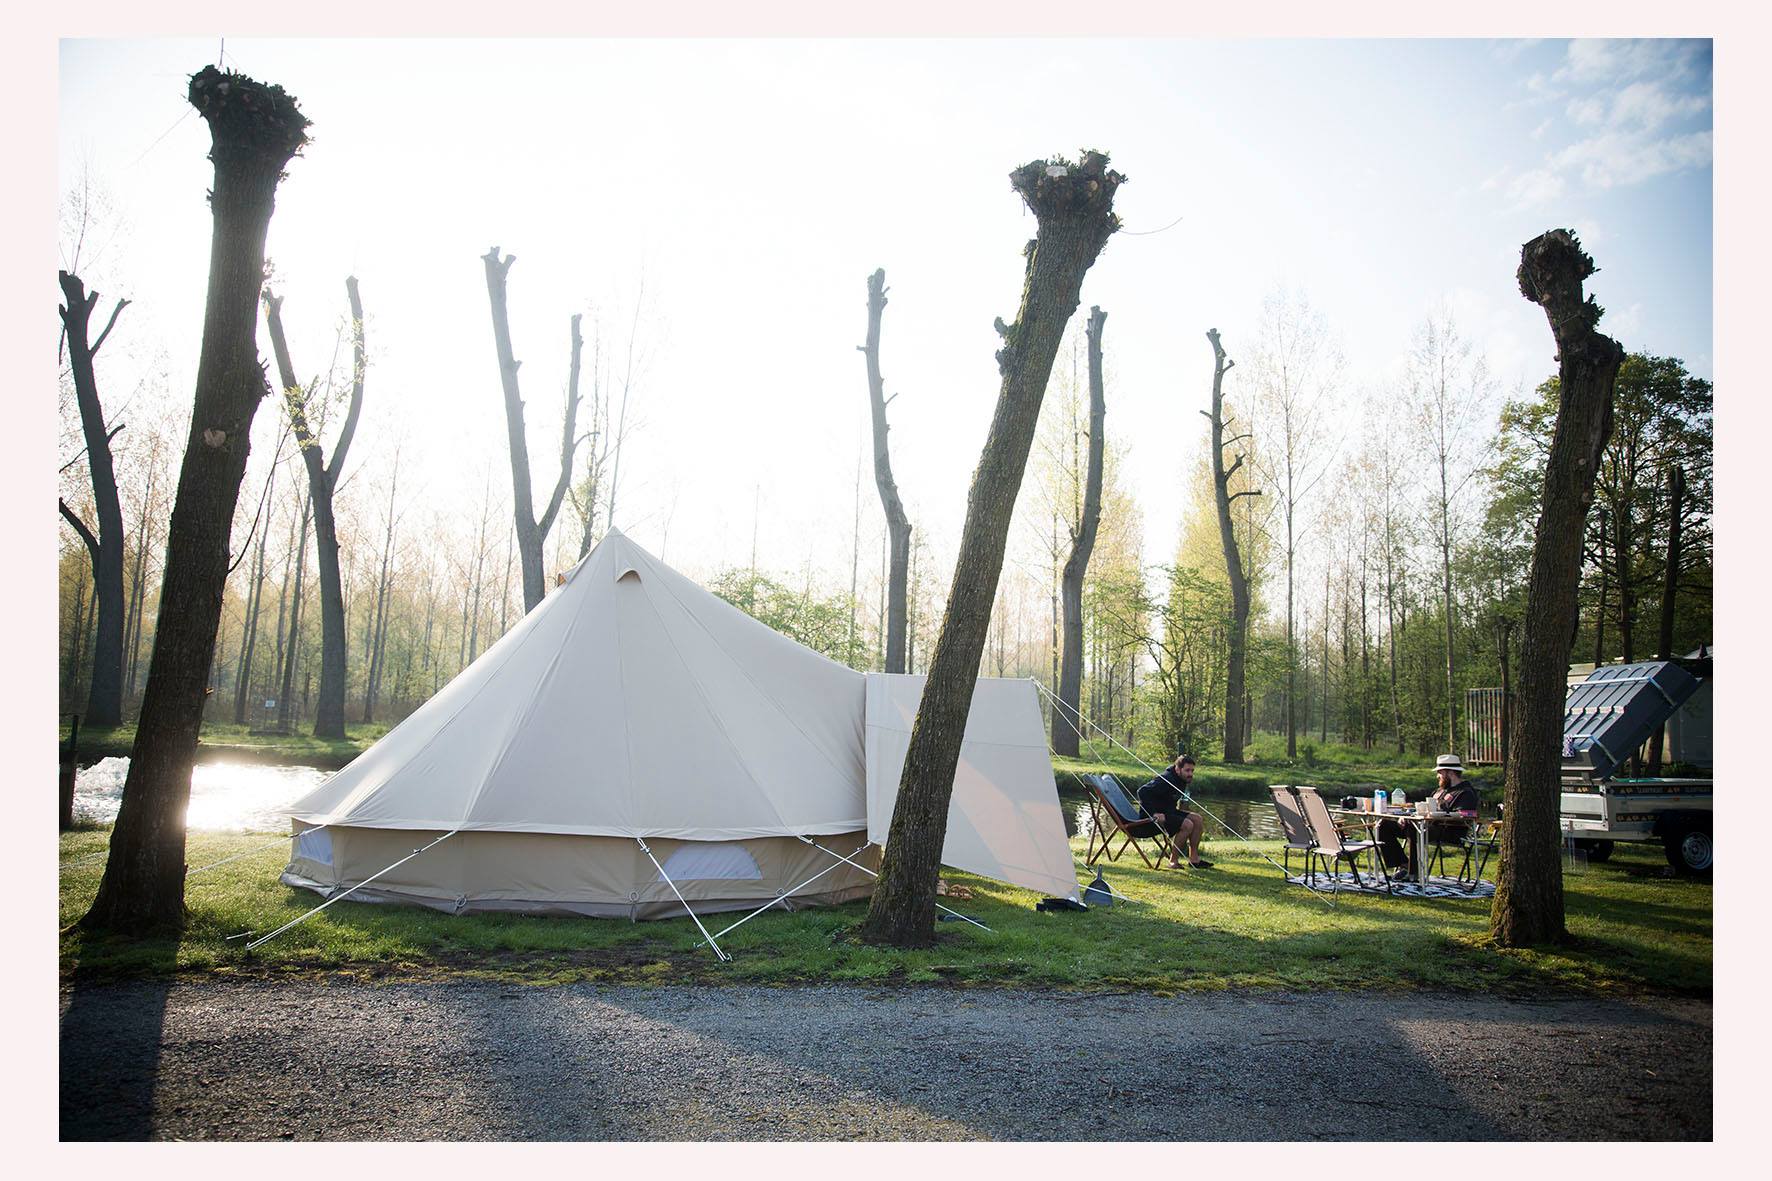 Camping Groeneveld